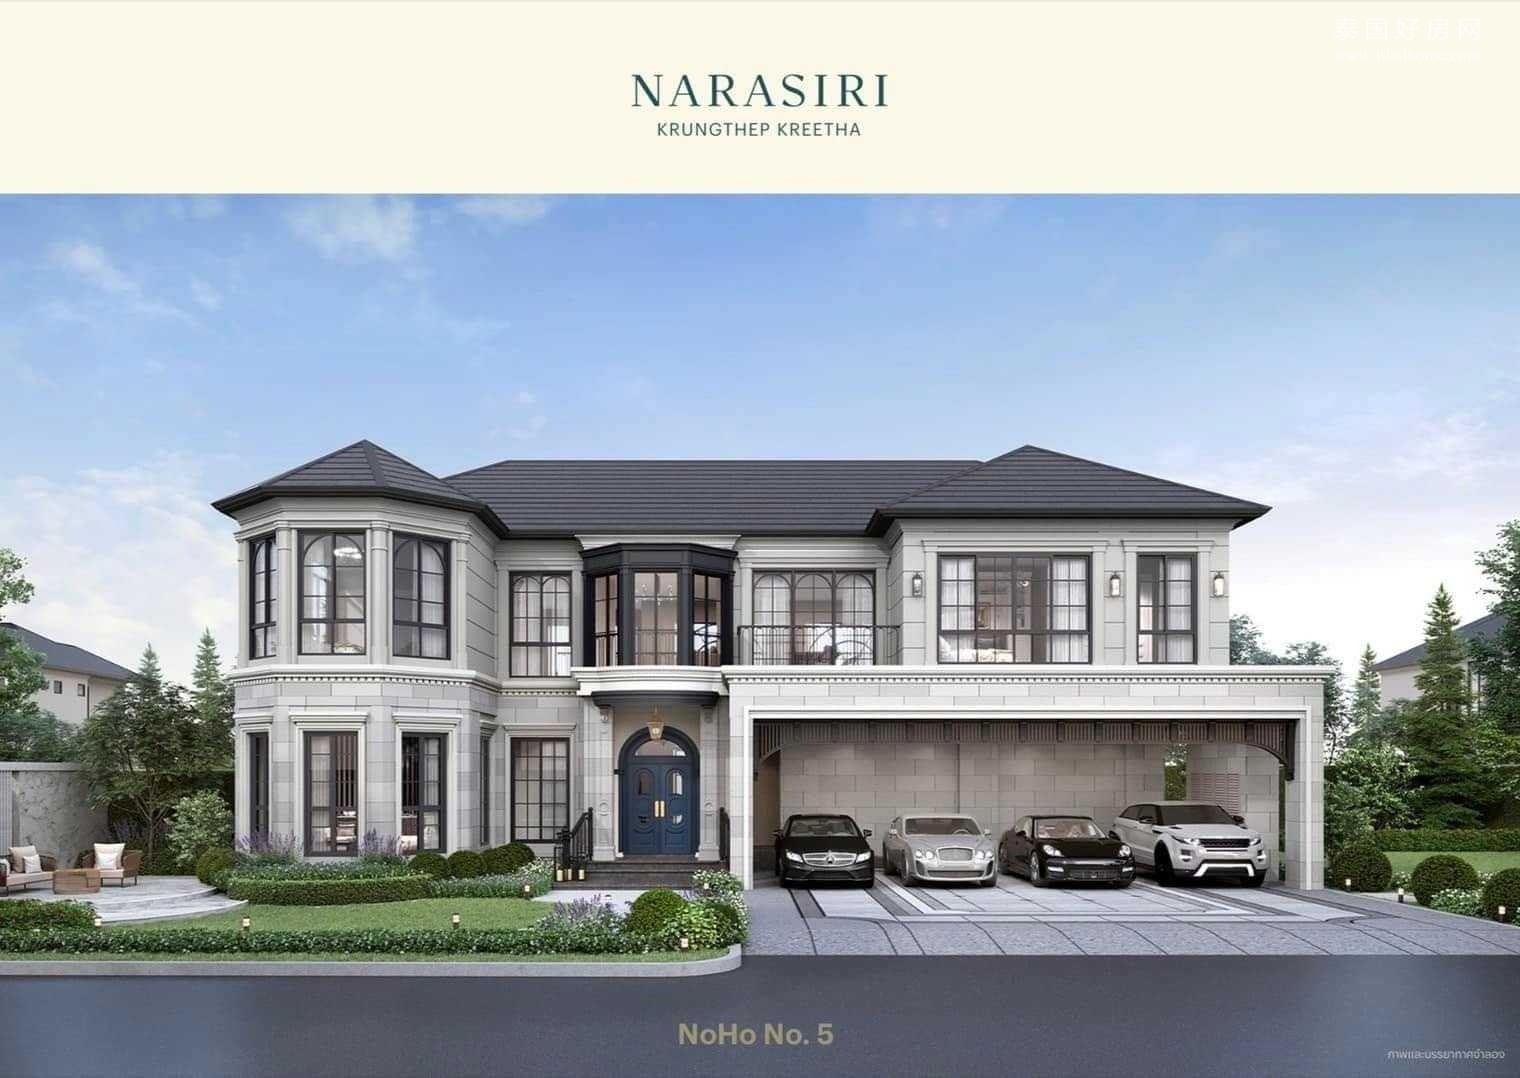 Narasiri Krungthepkreetha 独栋别墅出售 4卧554平米 9000万泰铢